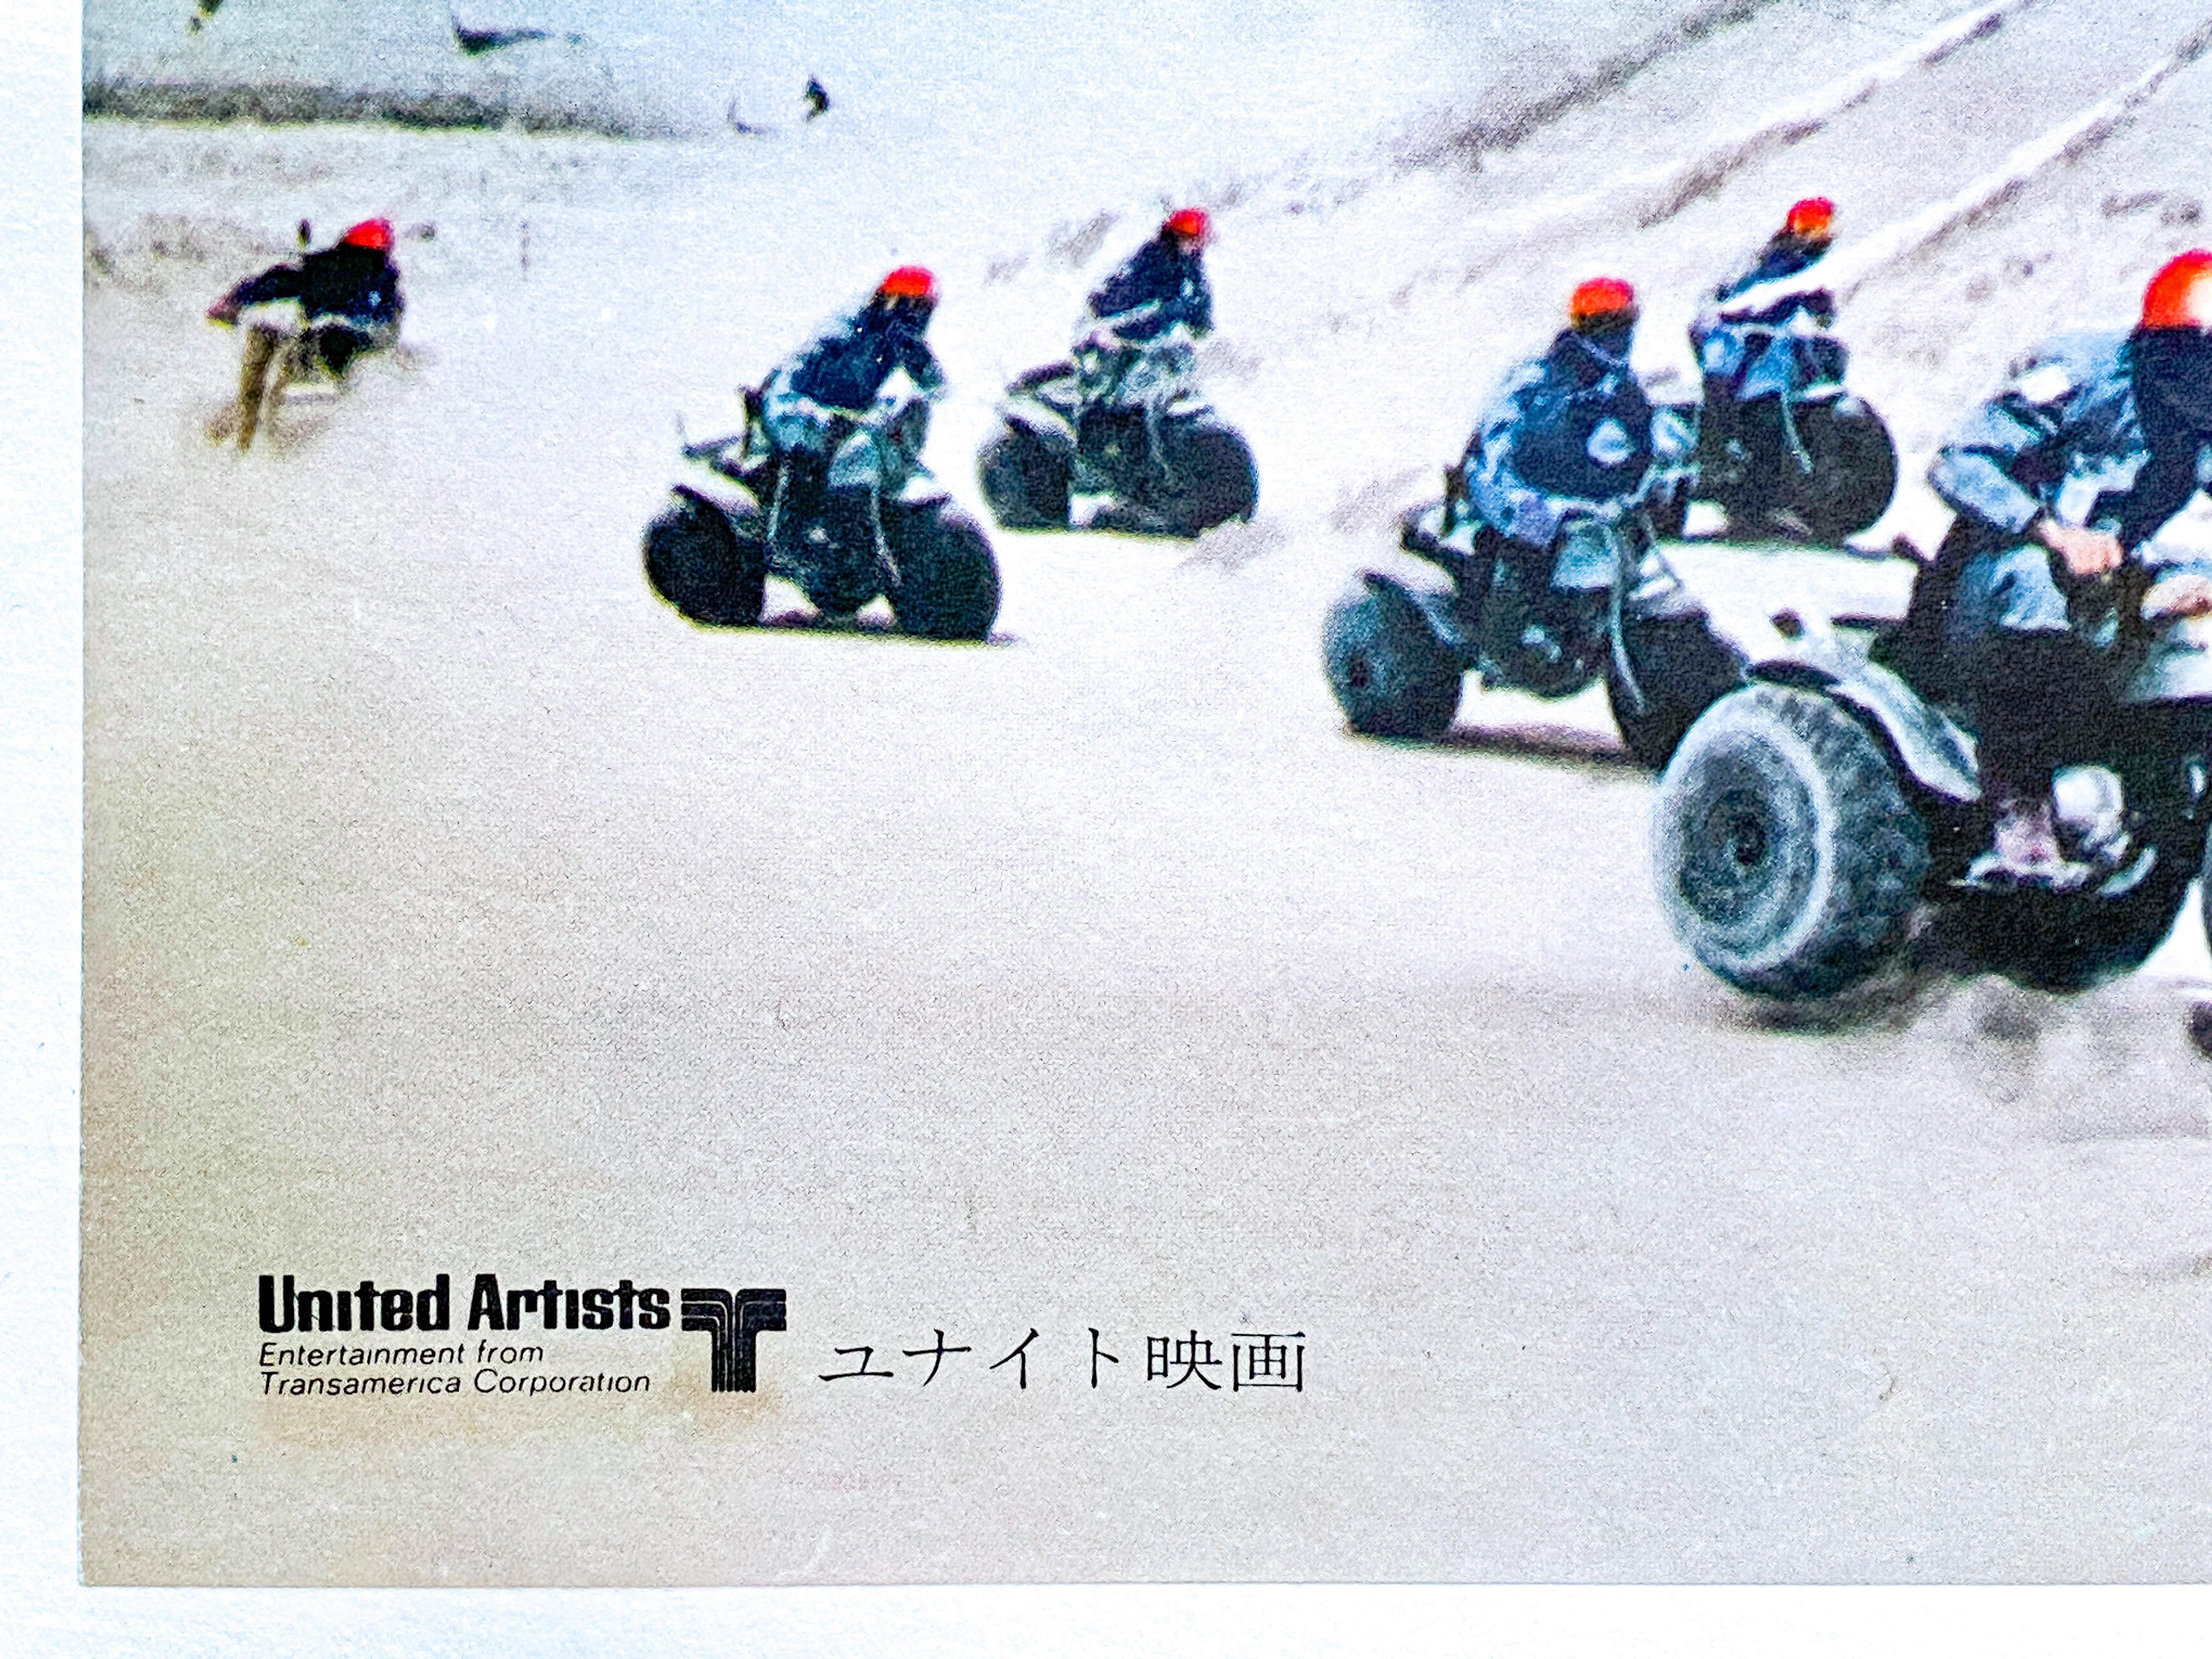 James Bond 'Diamonds Are Forever' Original Vintage Japanese Movie Poster, 1971 For Sale 1